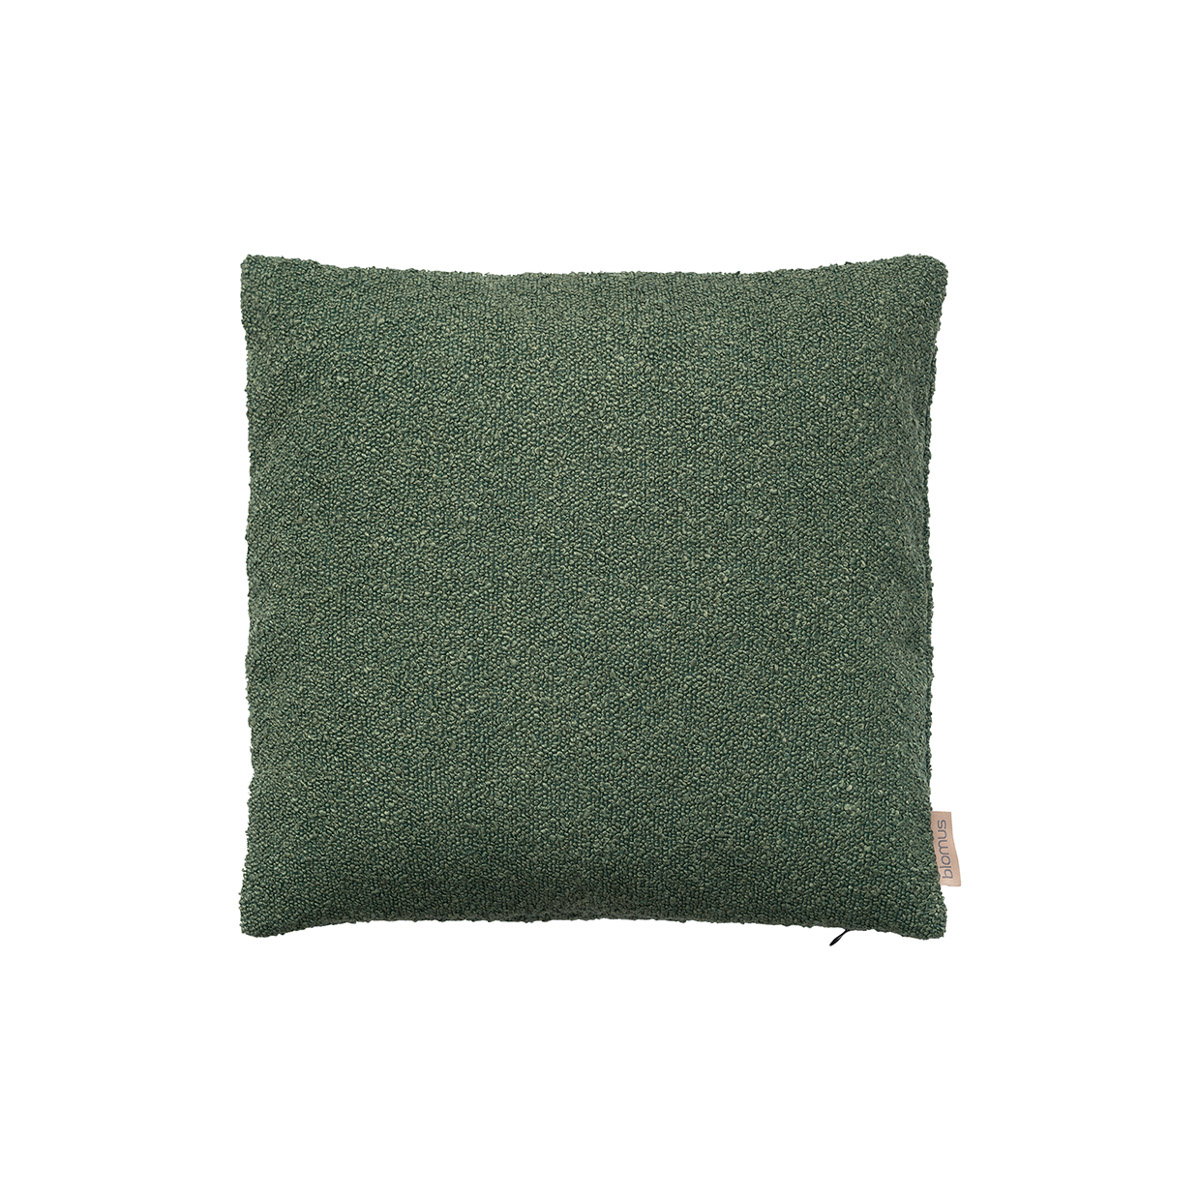 Kissenbezug -BOUCLE- Duck Green 40 x 40 cm. Material: 90% Polyester, 10% Acryl. Von Blomus.